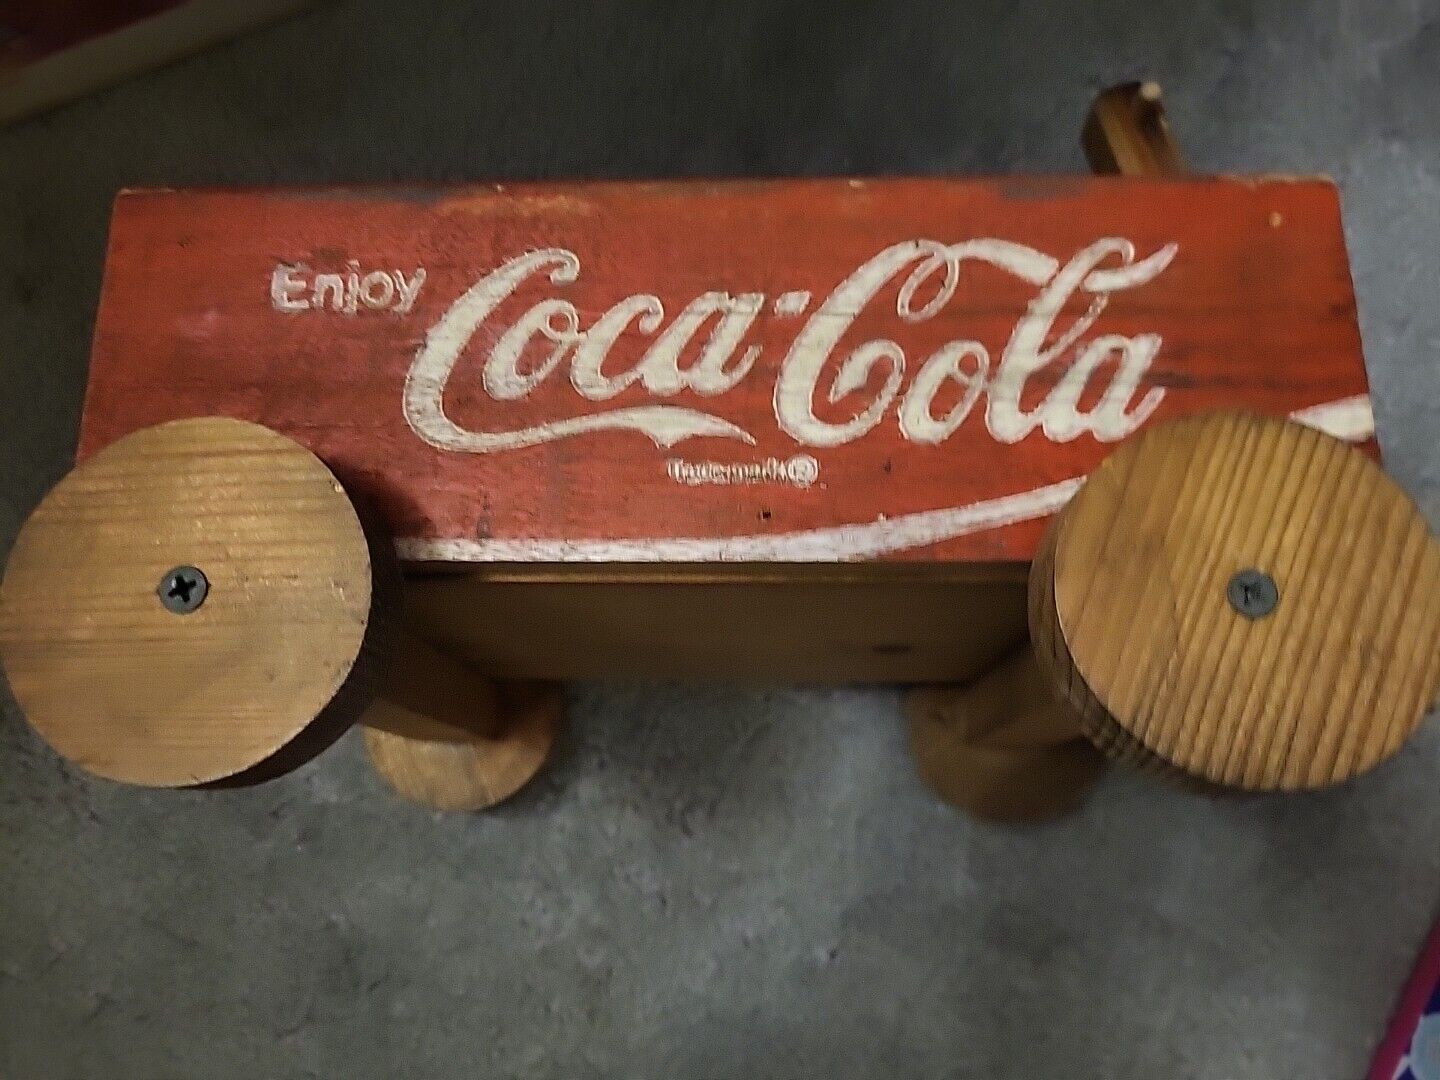 Nrw Coca-cola Wooden Wagon